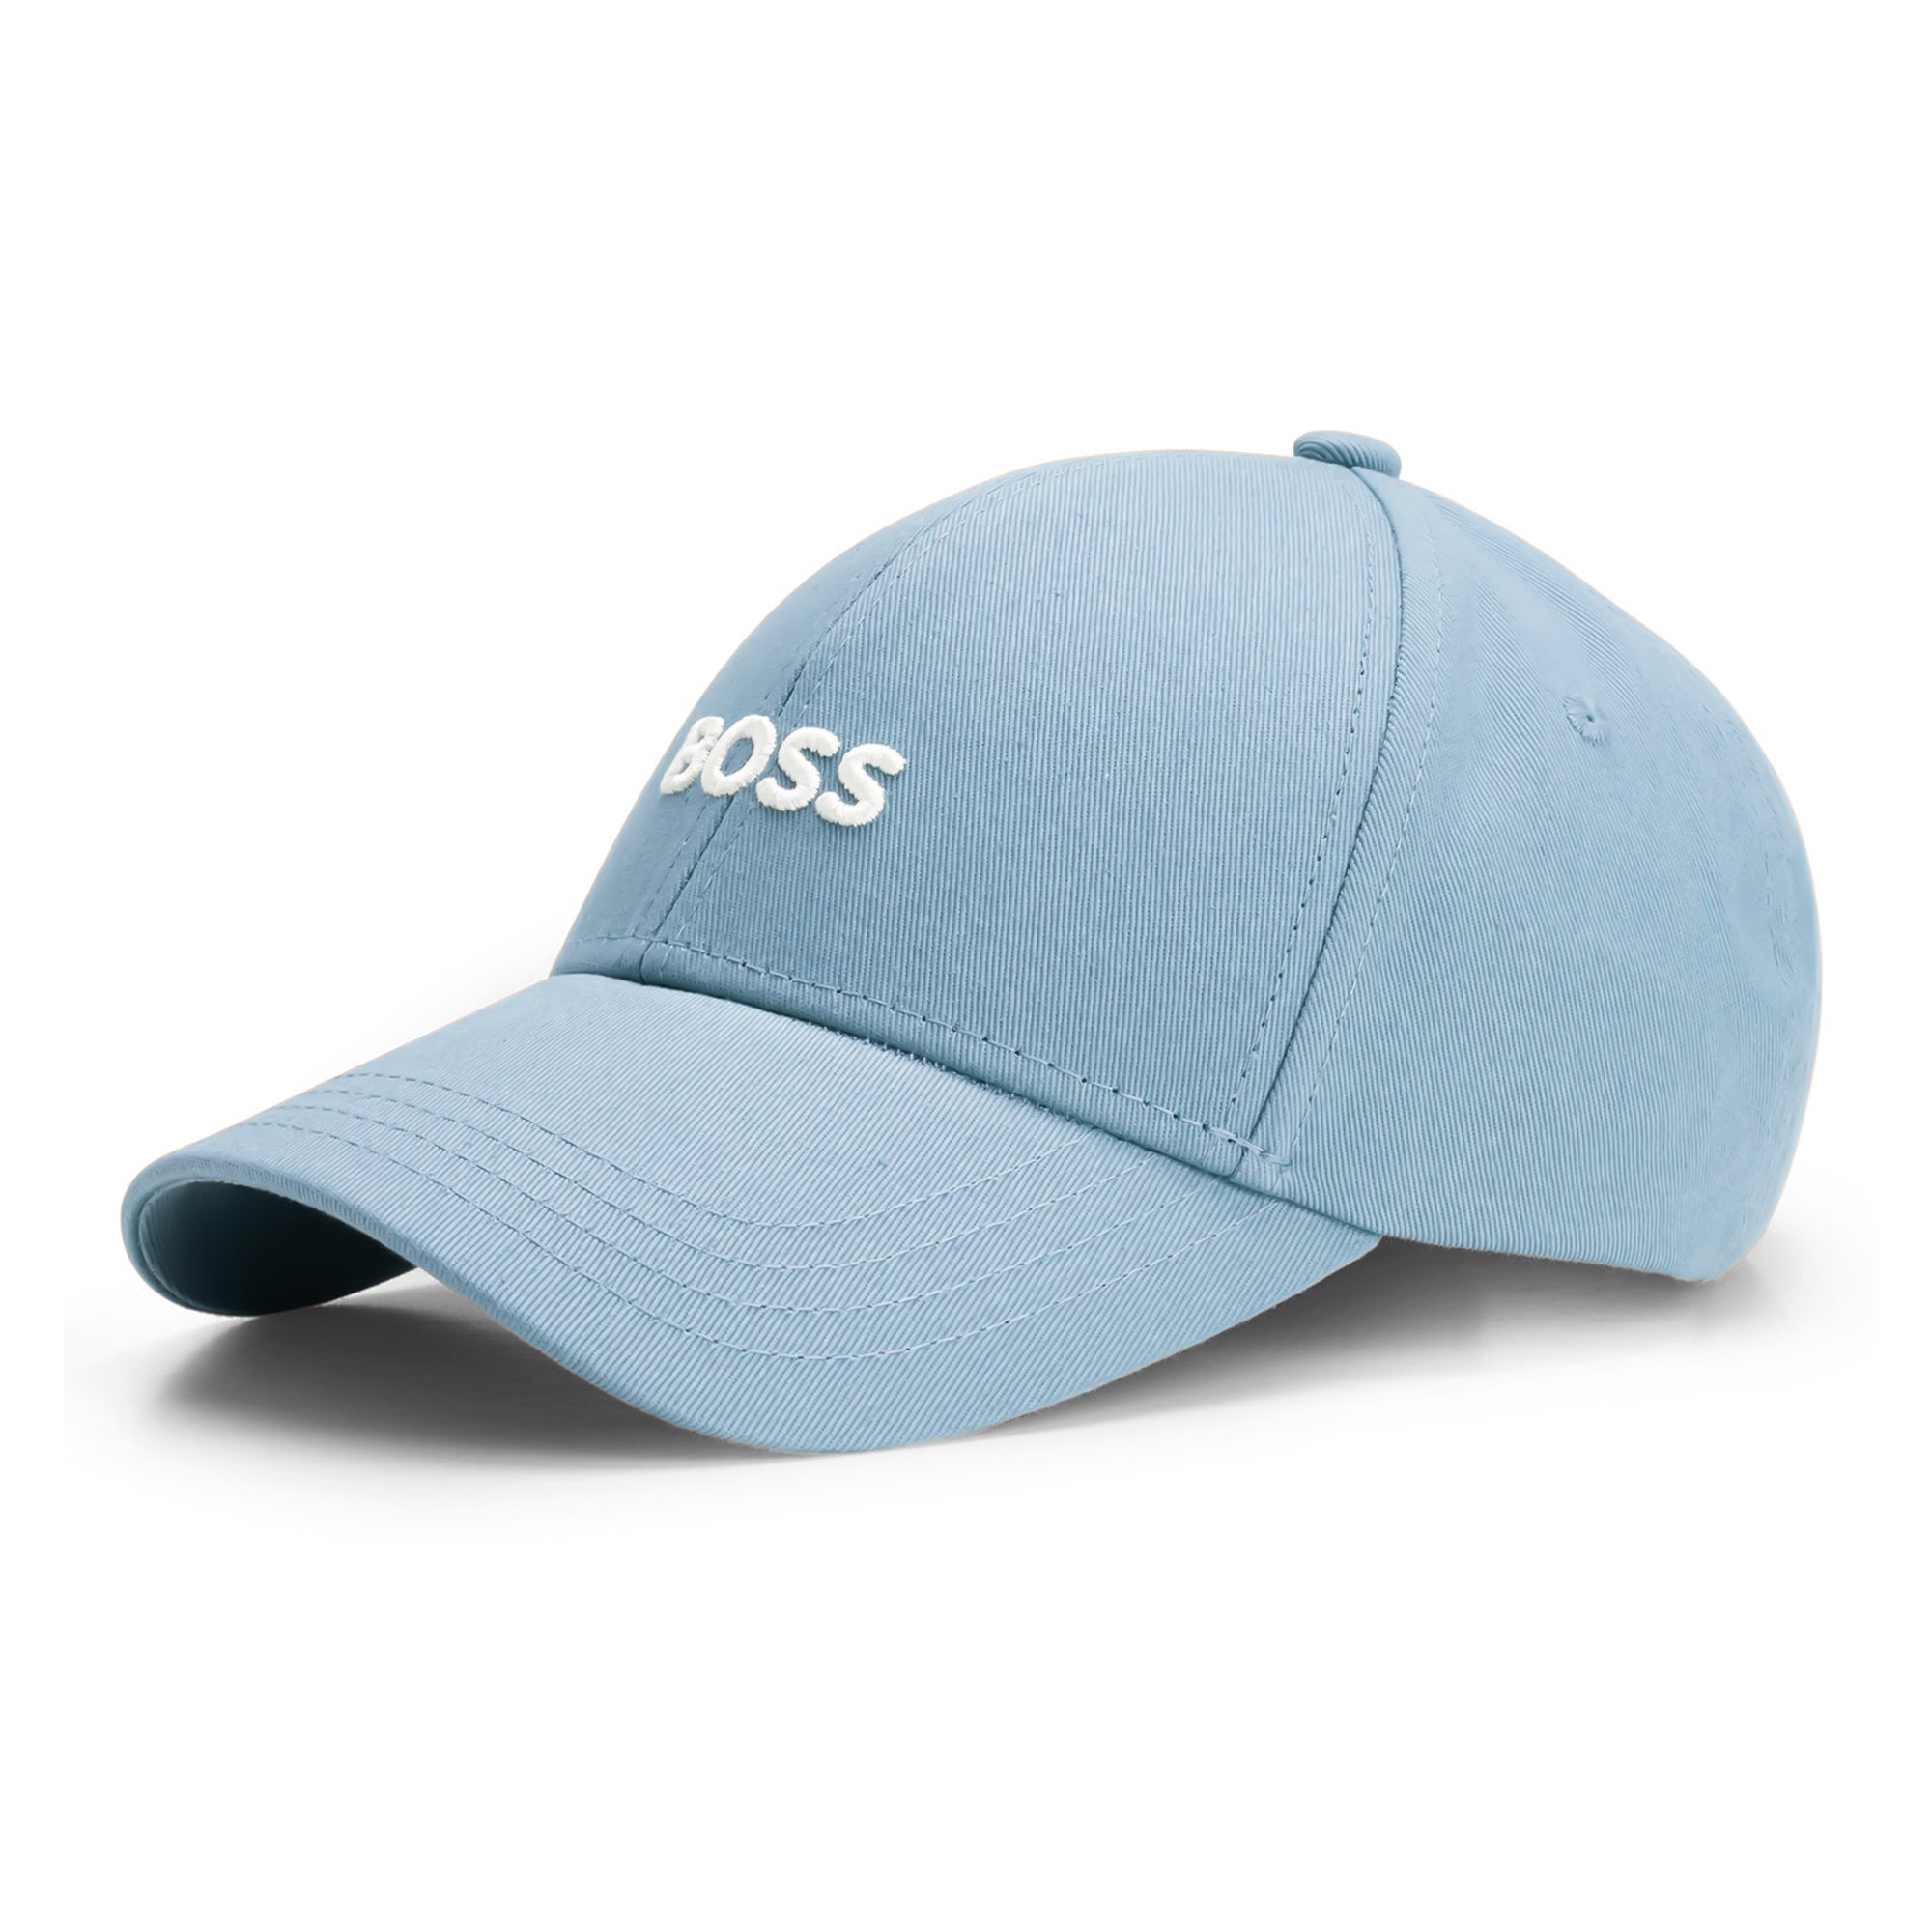 Boss Zed Embroidered Cotton Cap - Open Blue